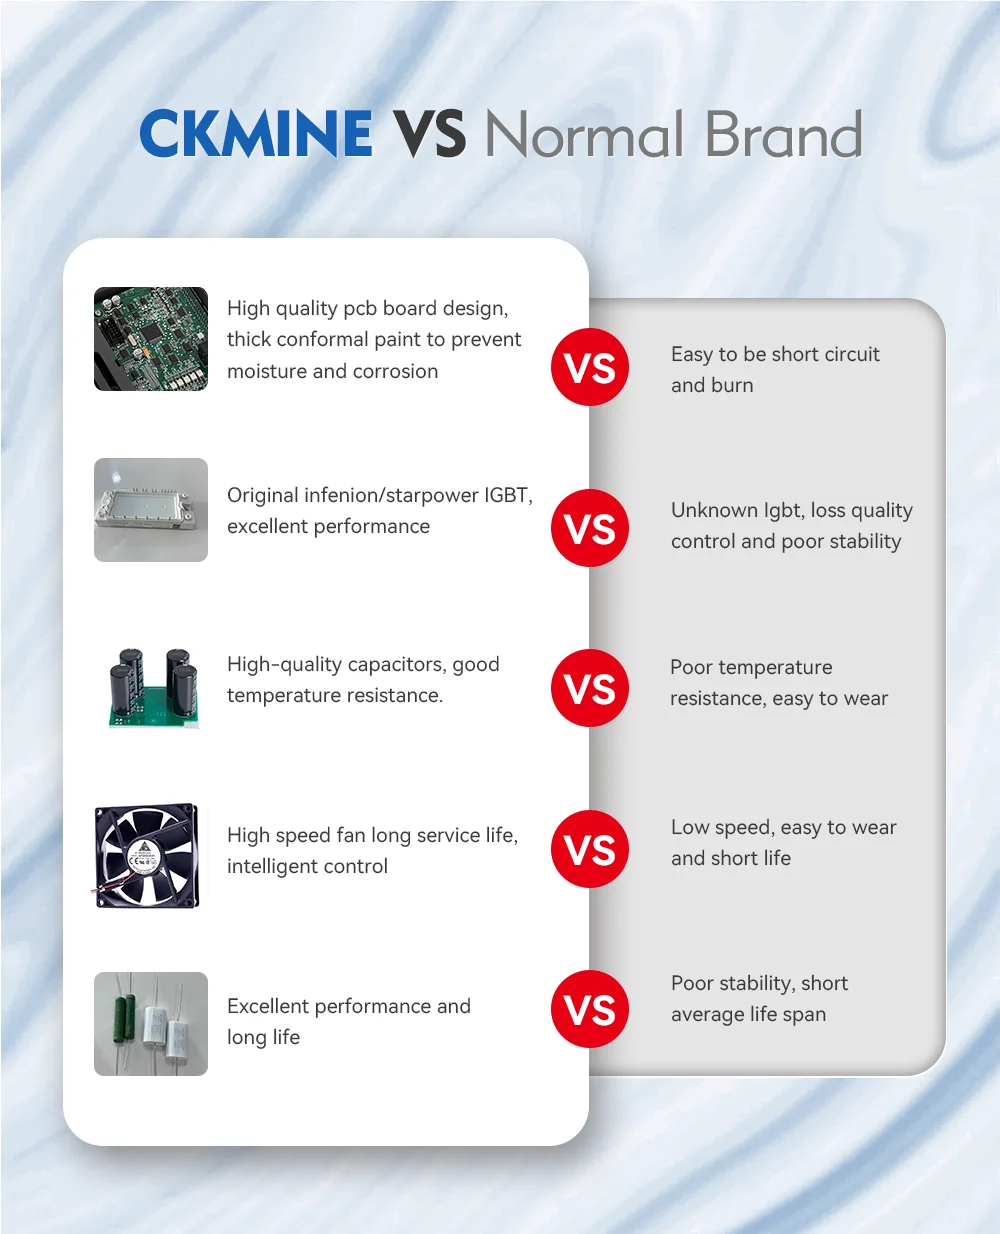 CKMINE 高効率品質 VFD 7.5KW 可変周波数 3 相インバーター AC エレベーター駆動リフトコンバーターモーターの詳細